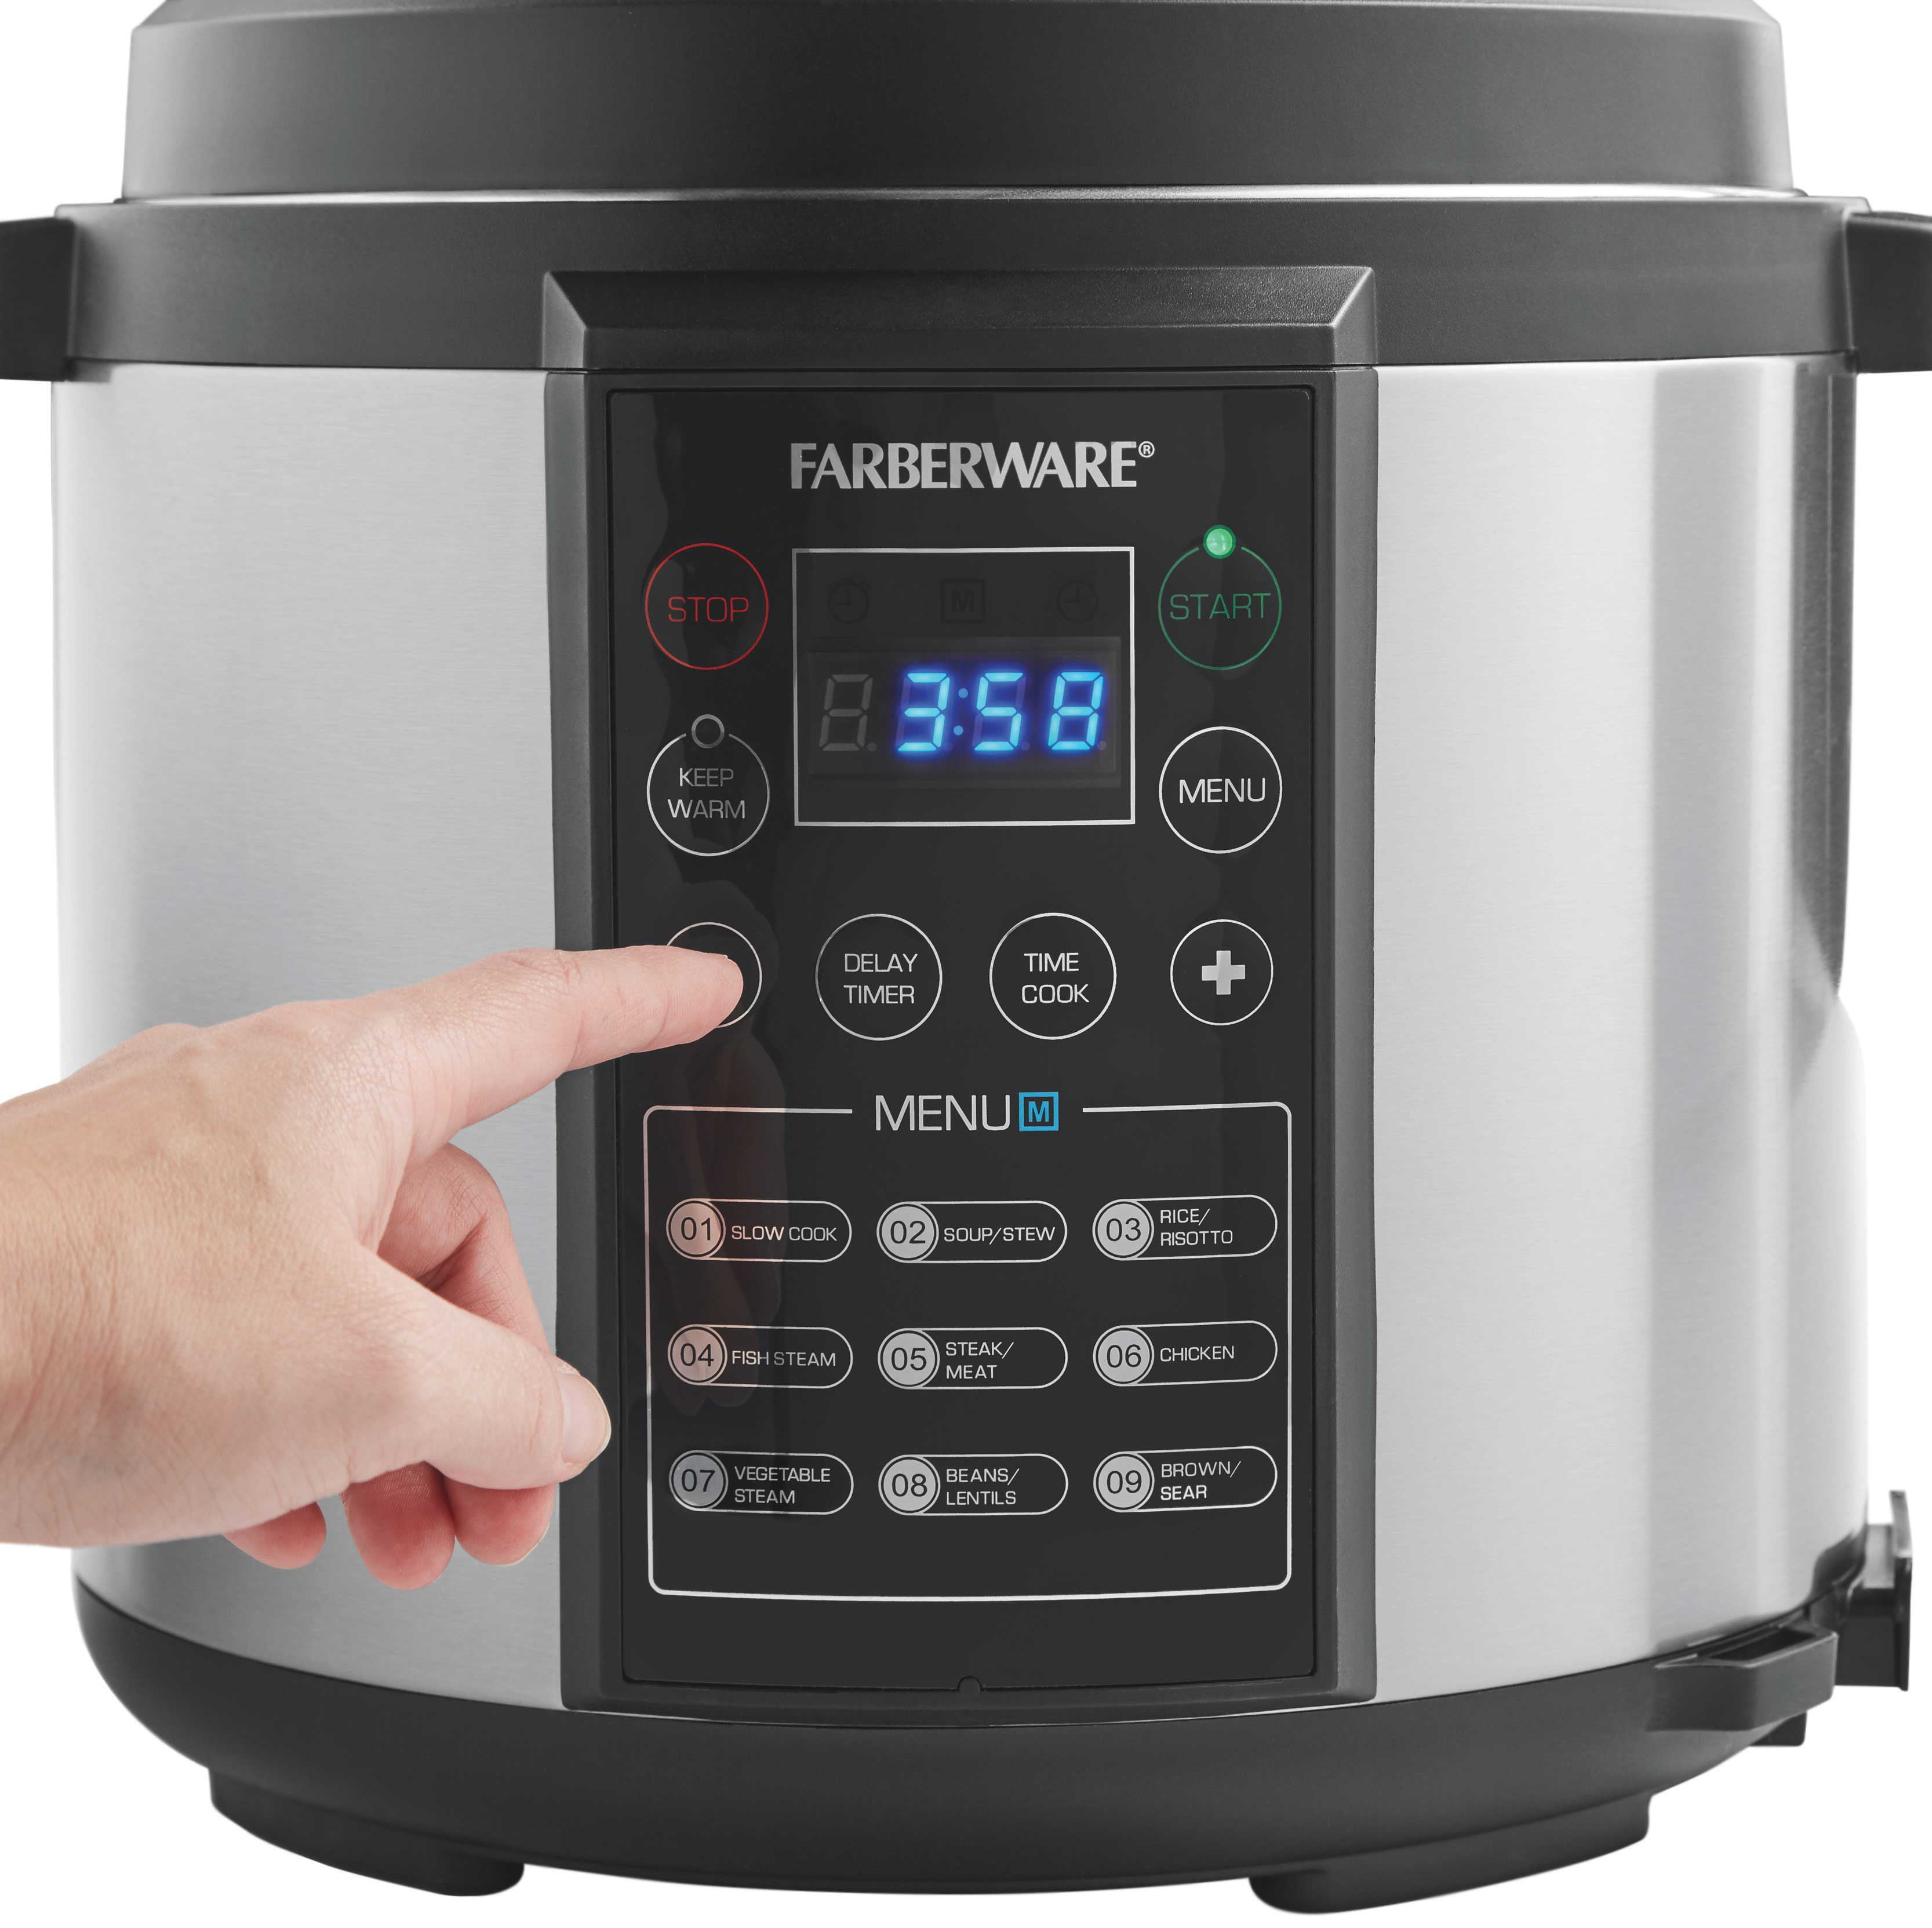 Farberware 6-Quart Digital Pressure Cooker Possibly Only $30